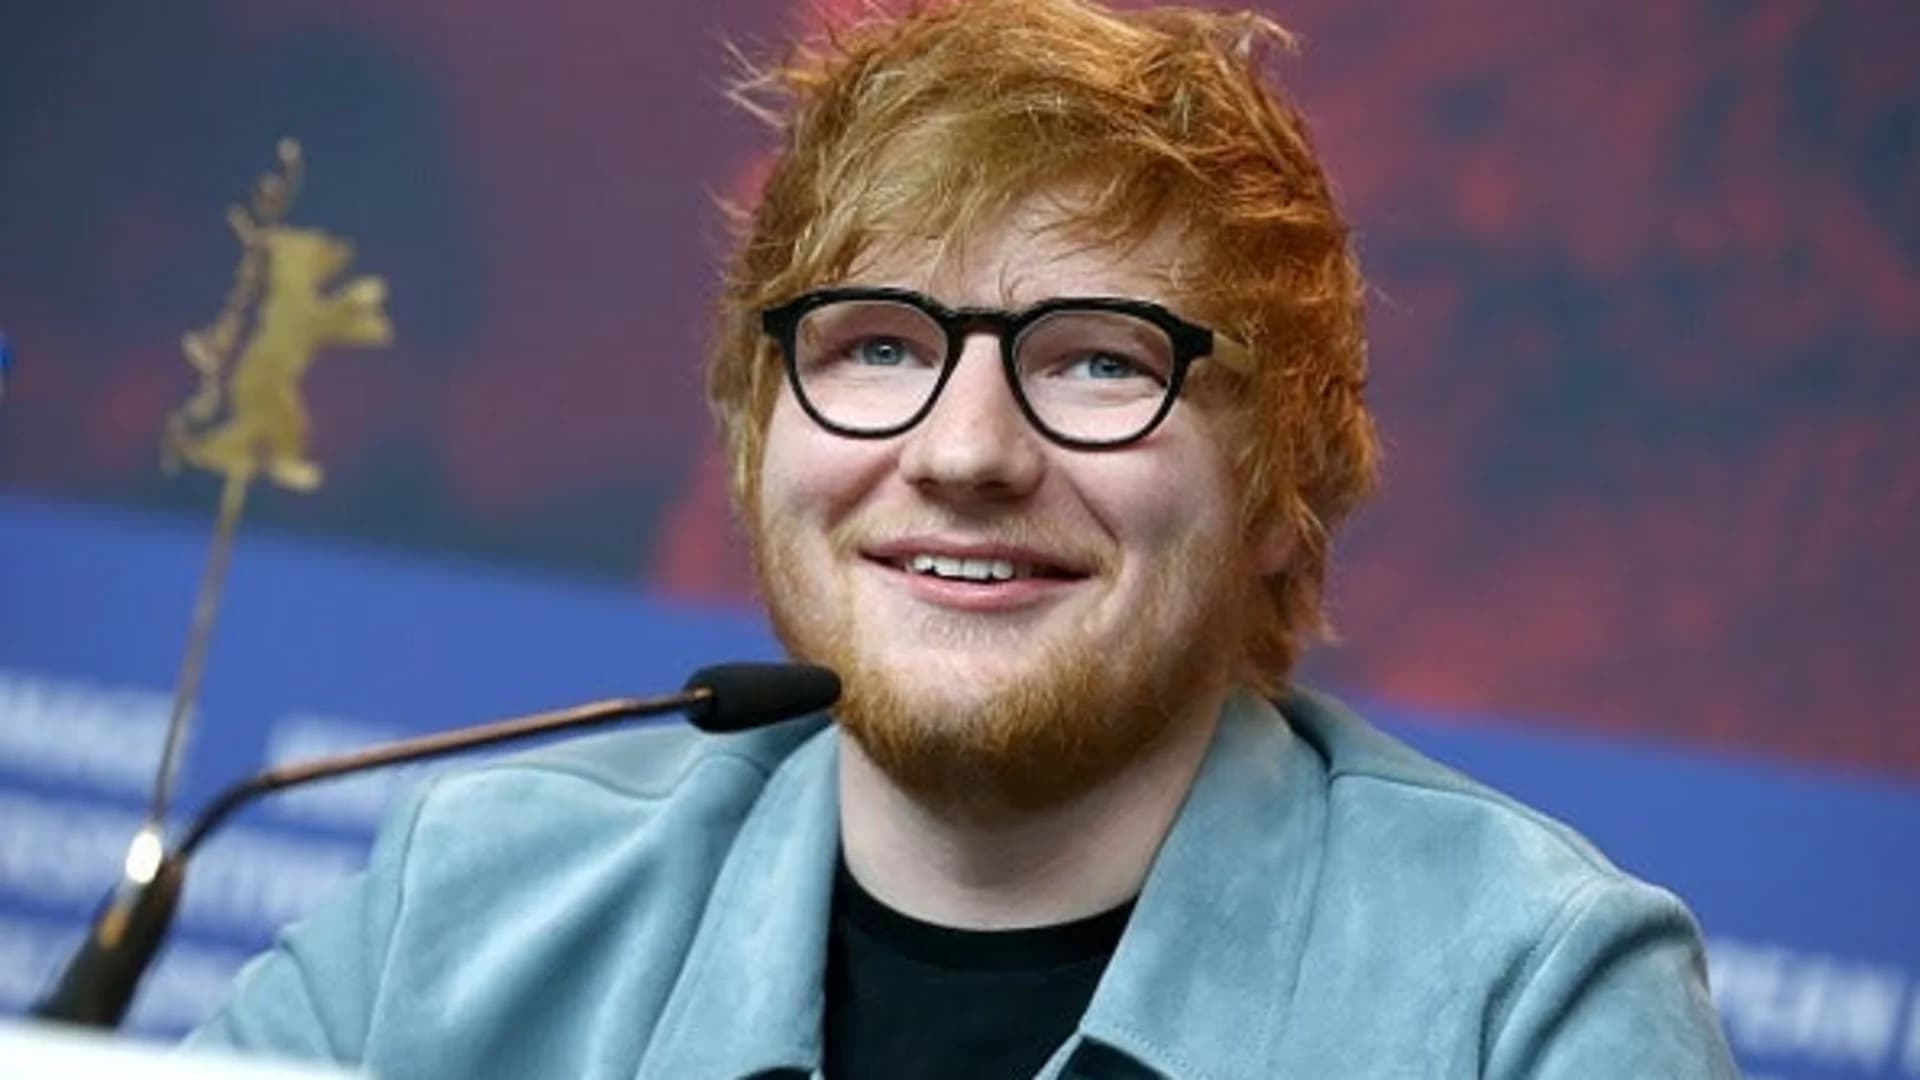 British singer Ed Sheeran grabs a beer at Connecticut pub